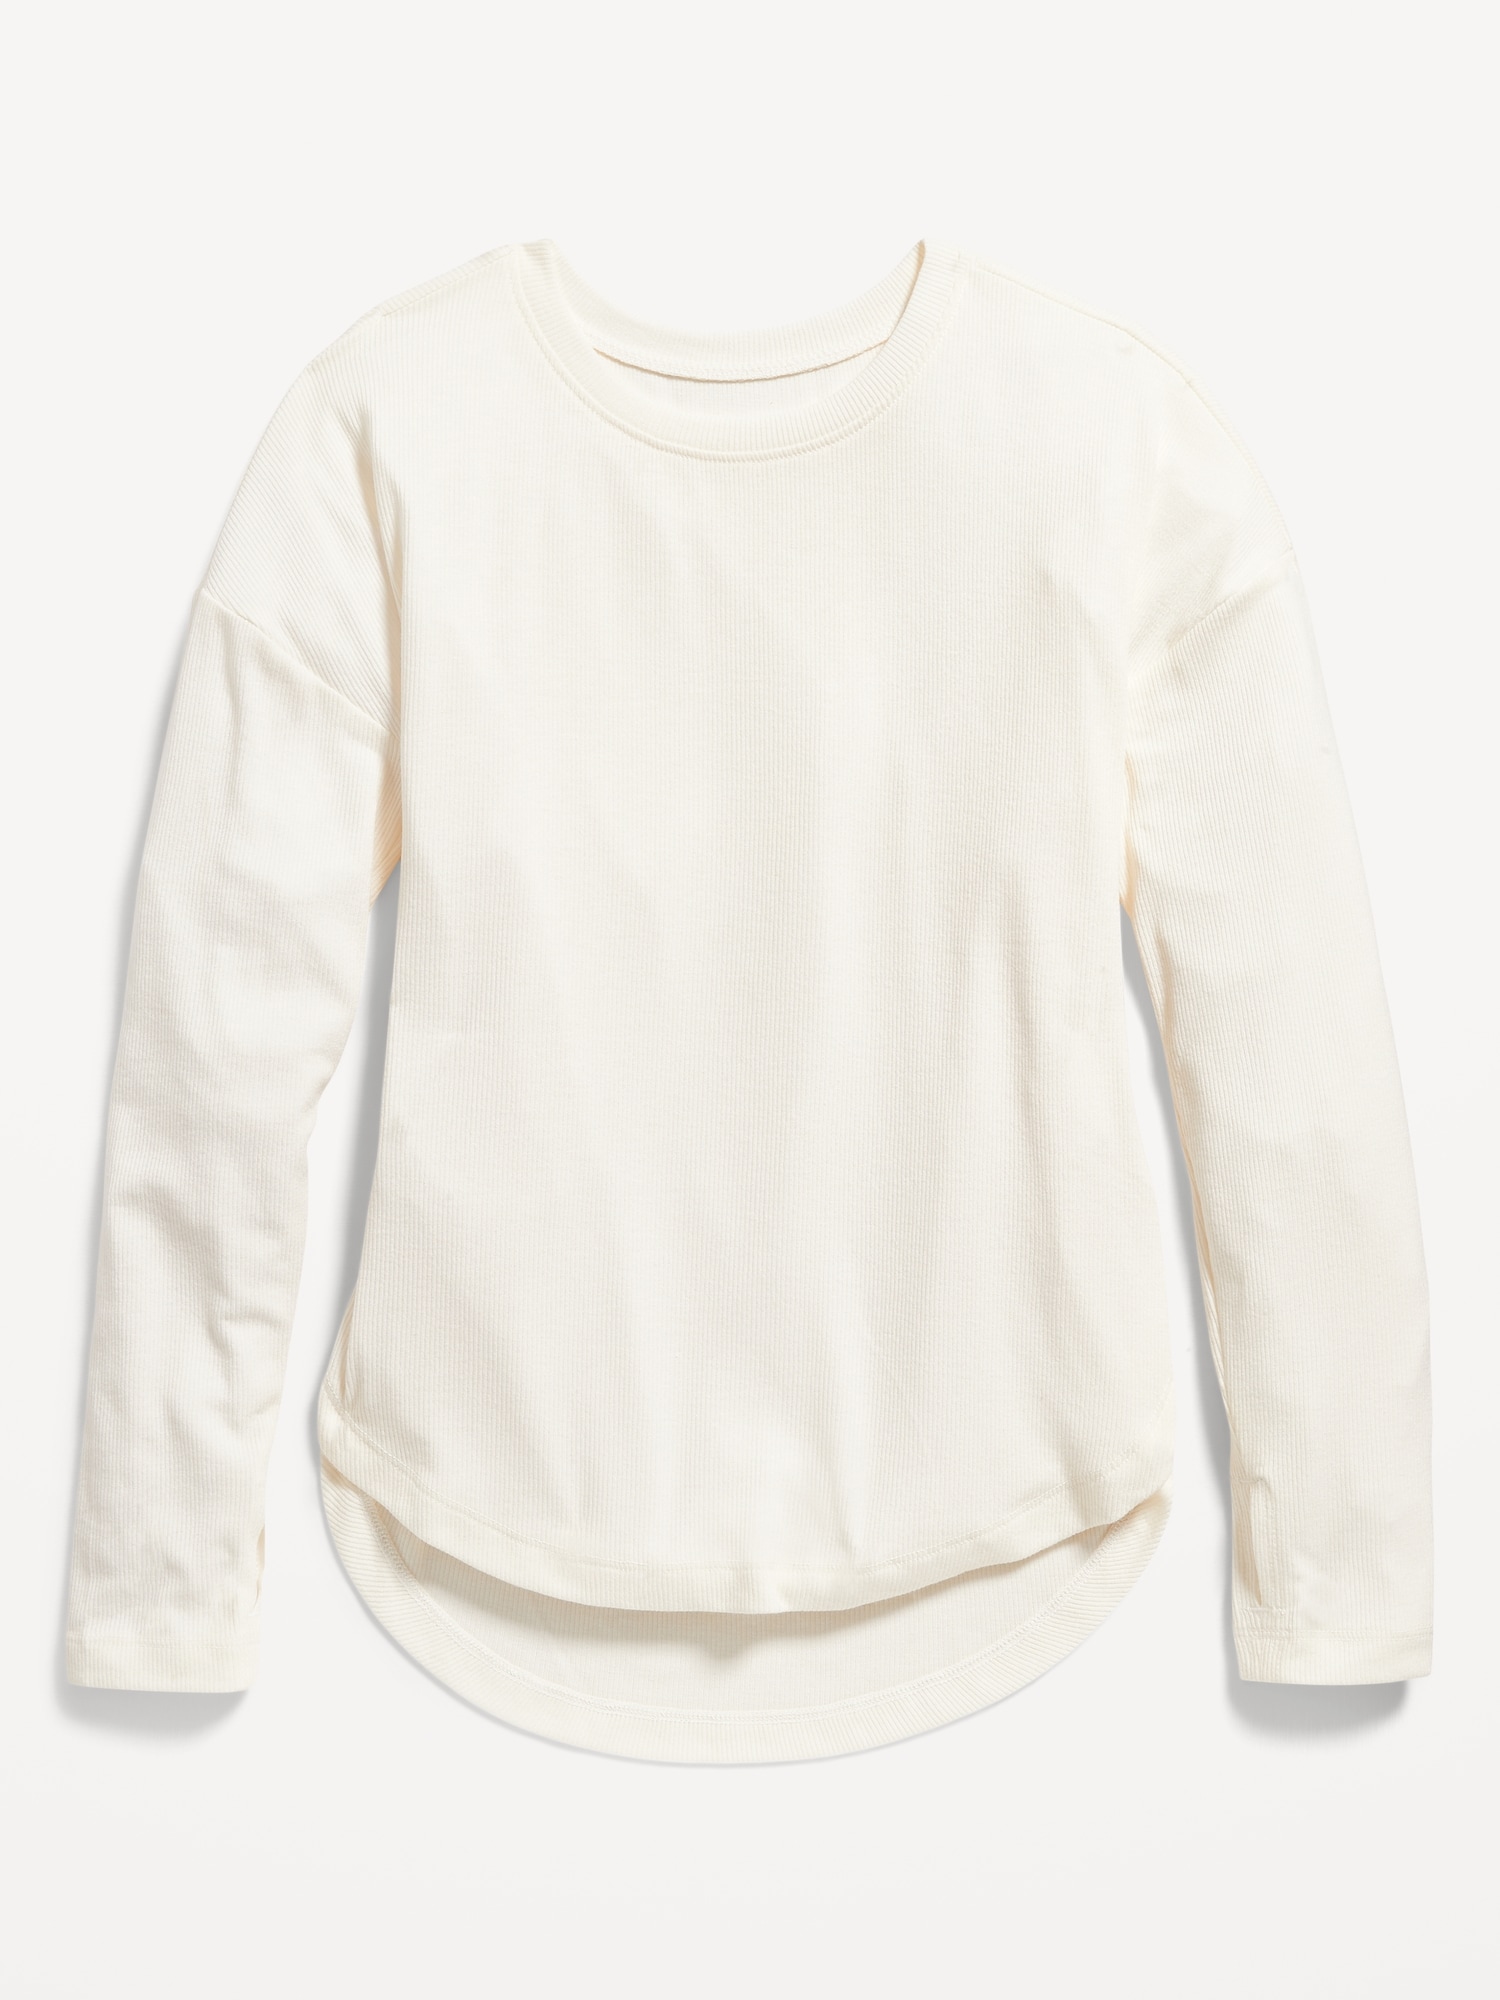 Old Navy UltraLite Long-Sleeve Rib-Knit Tunic T-Shirt for Girls white. 1